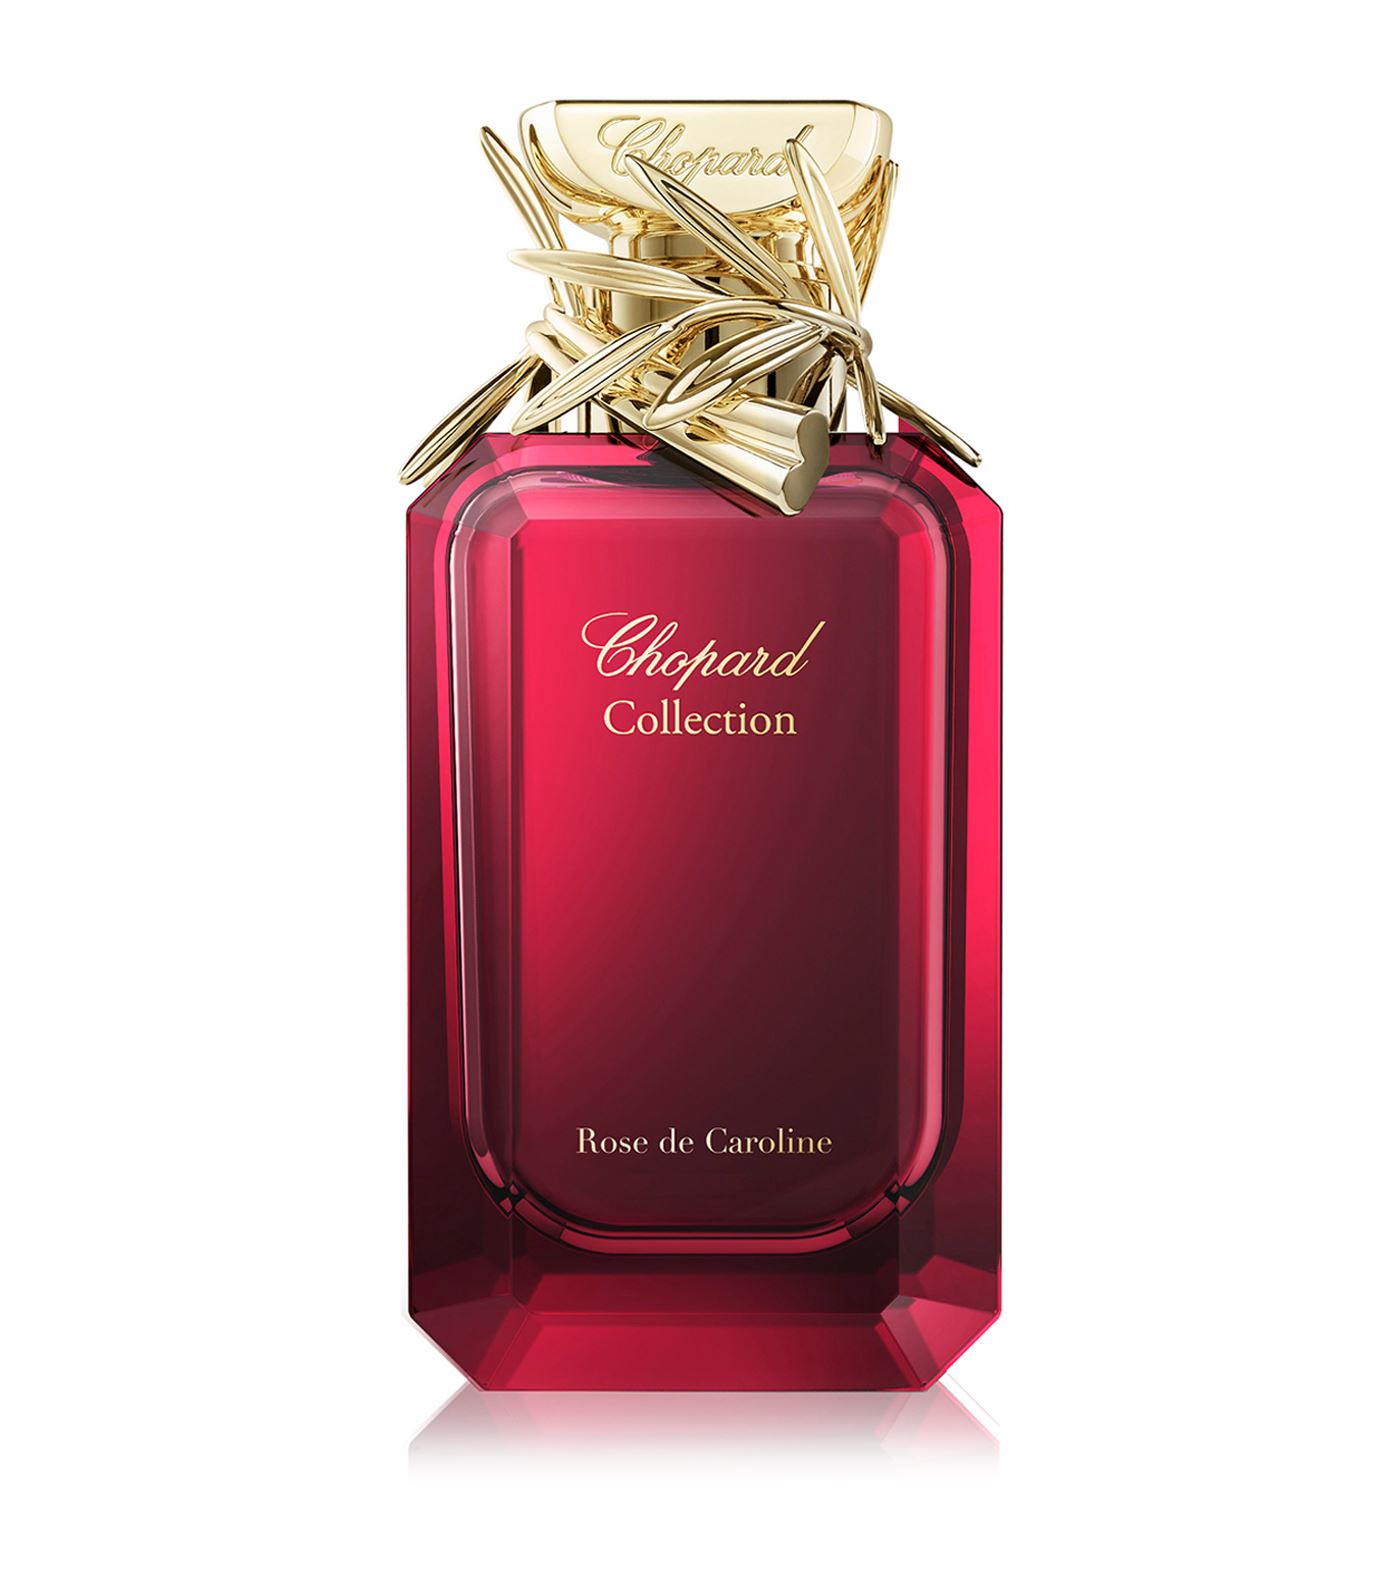 Rose de Caroline Chopard perfume - a new fragrance for ...